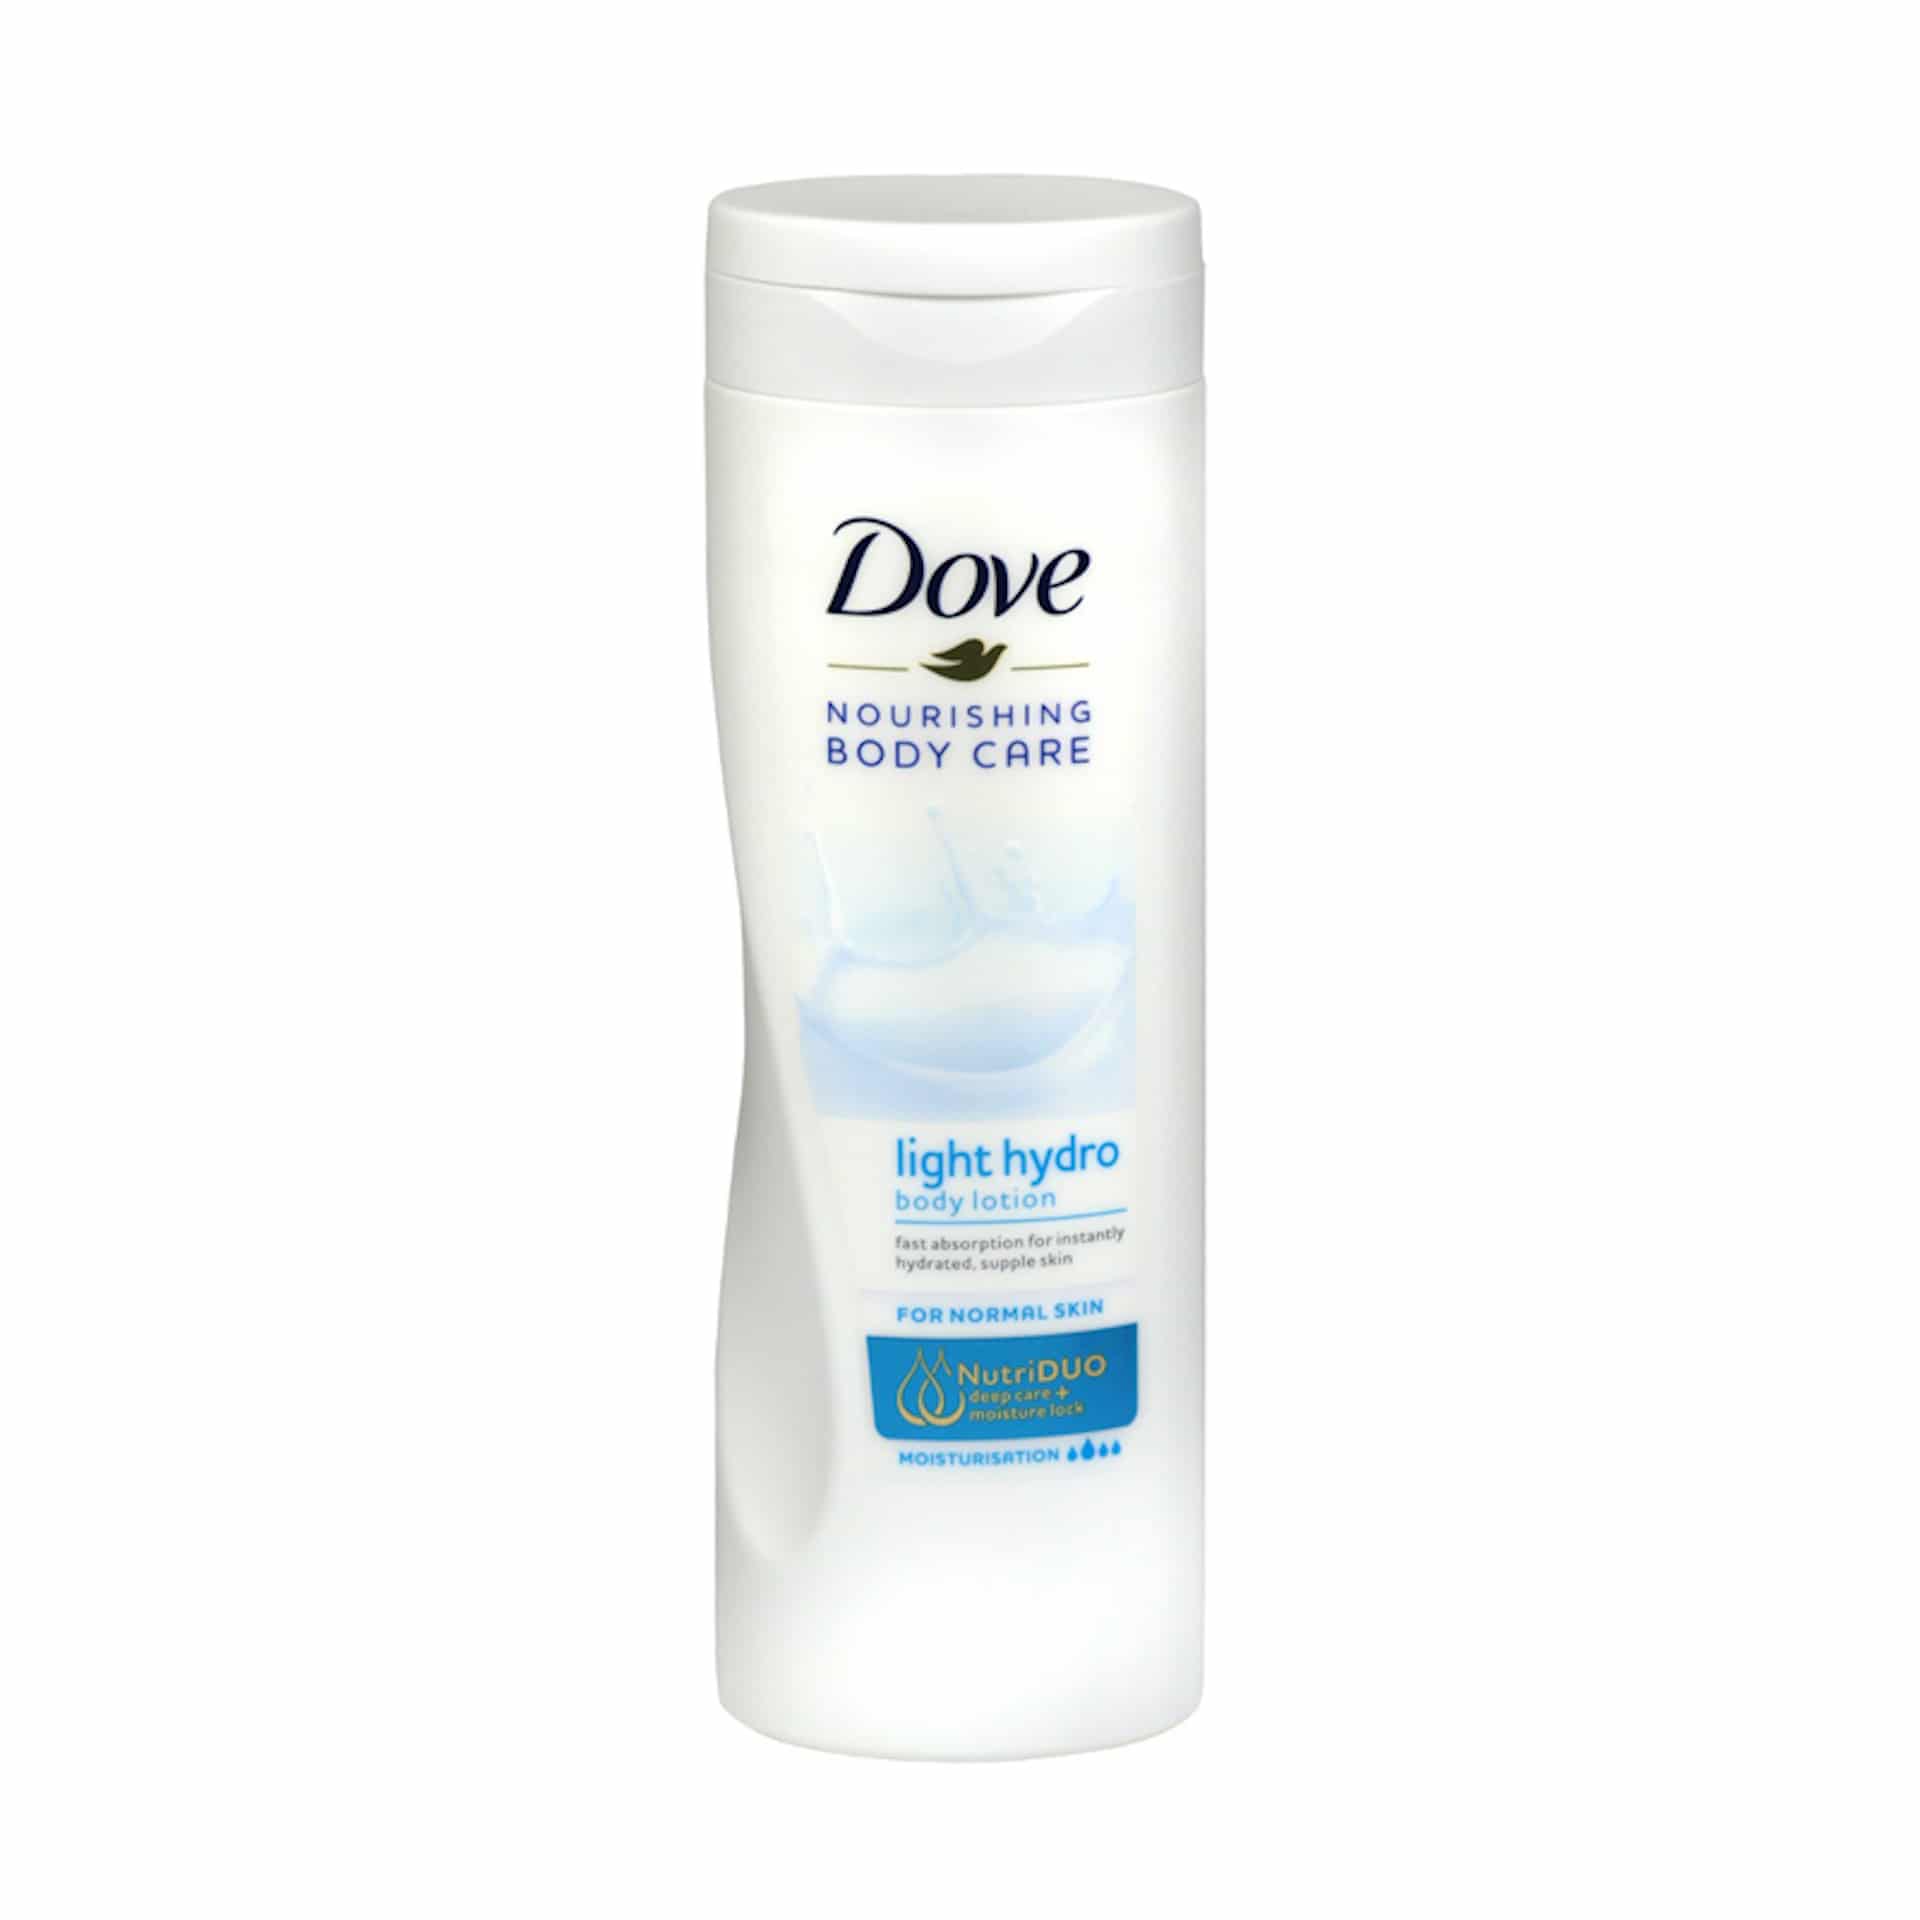 Dove Nourishing Body Care Light Hydro Body Lotion 400ml - I-Scent